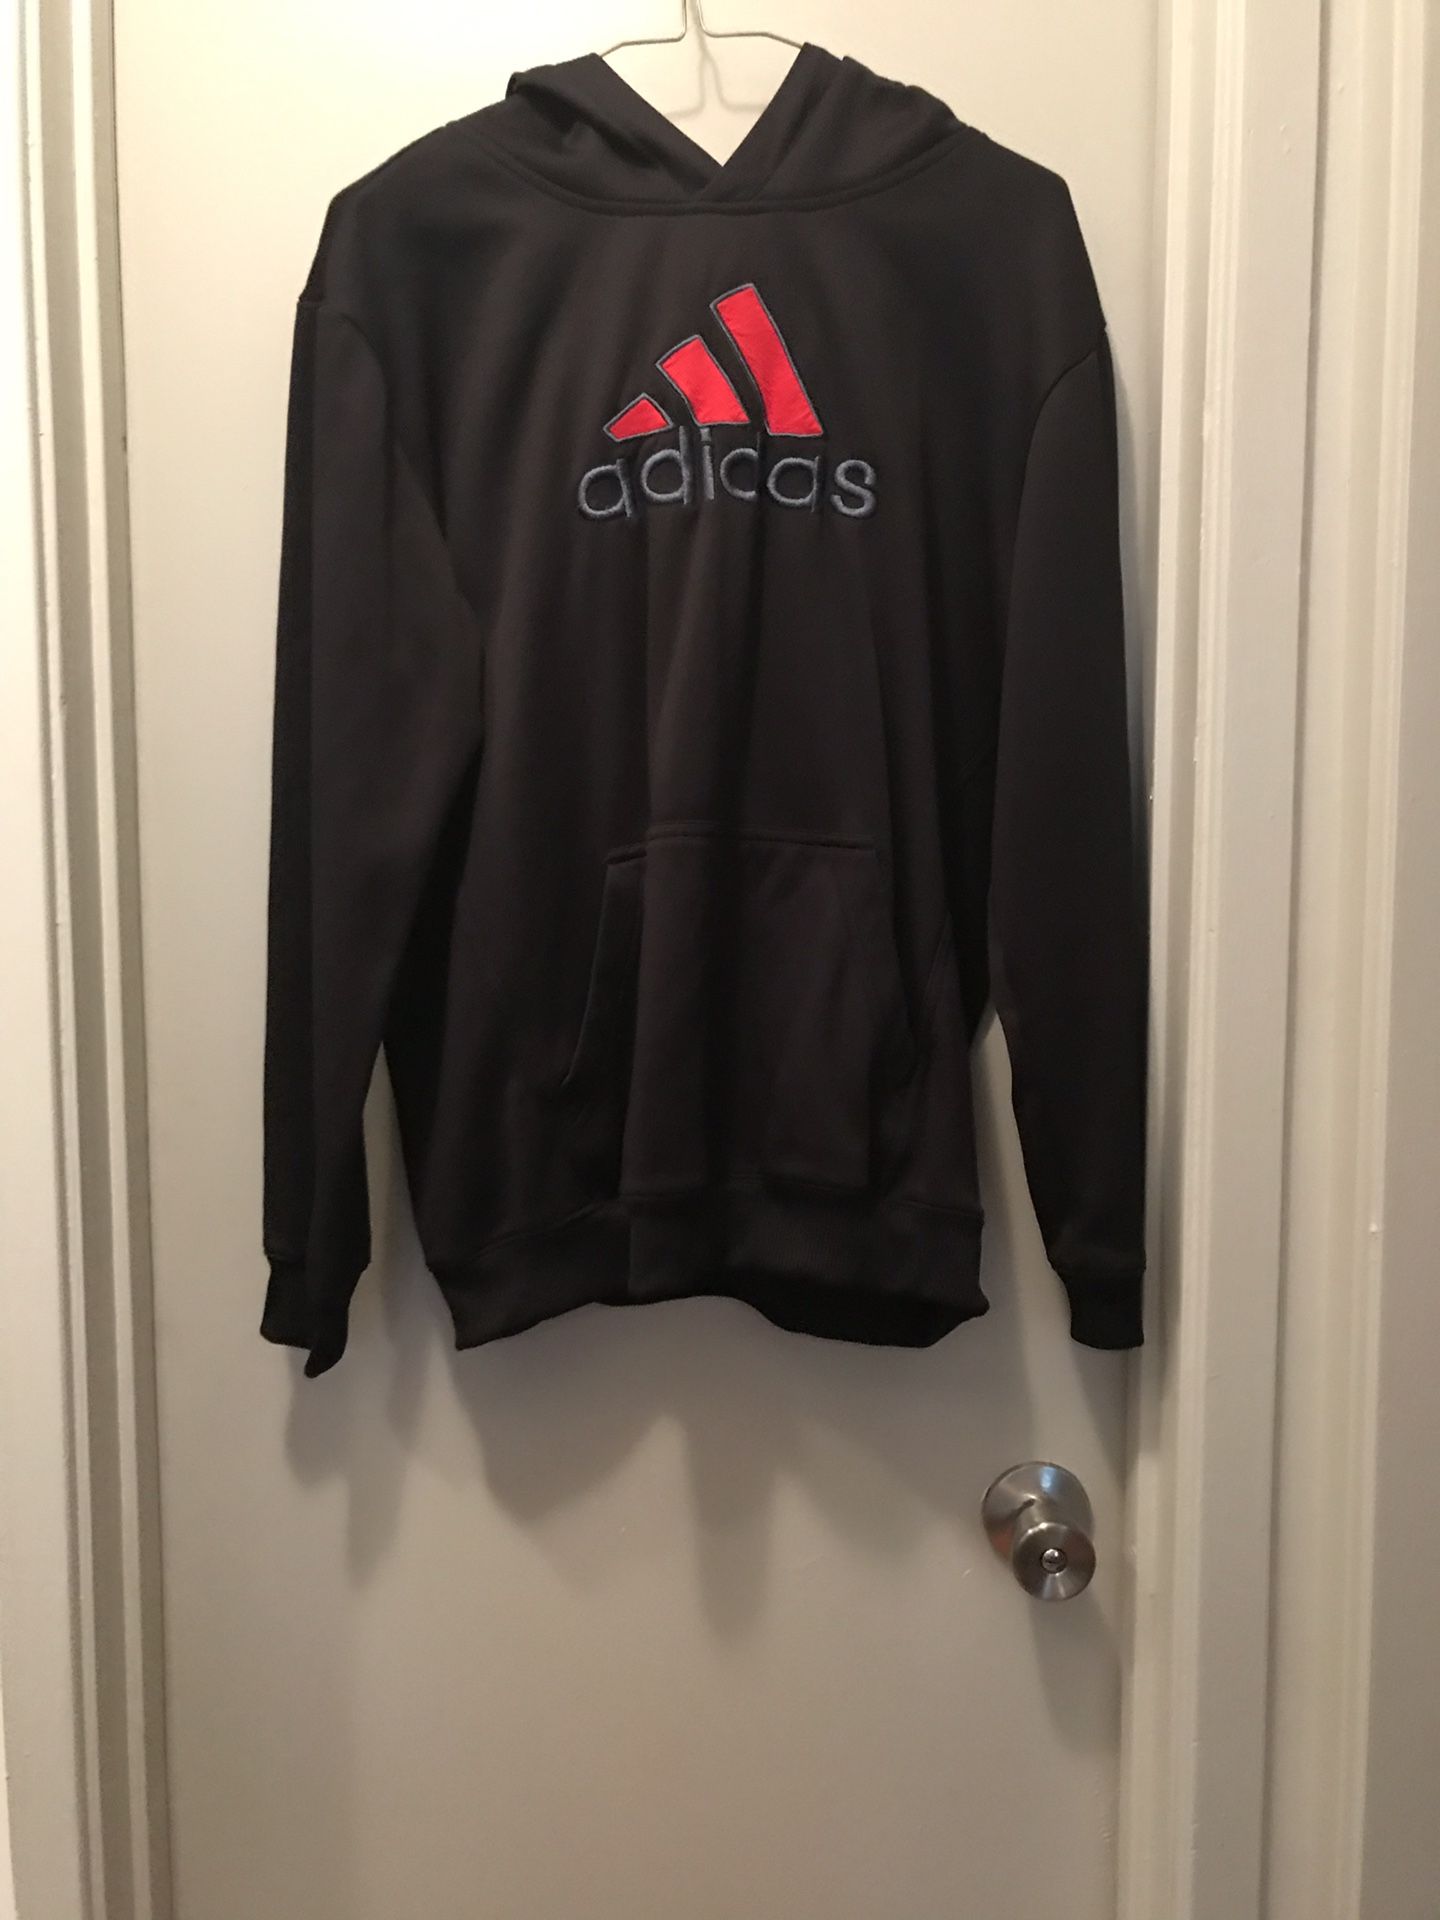 Adidas hoodie size 18